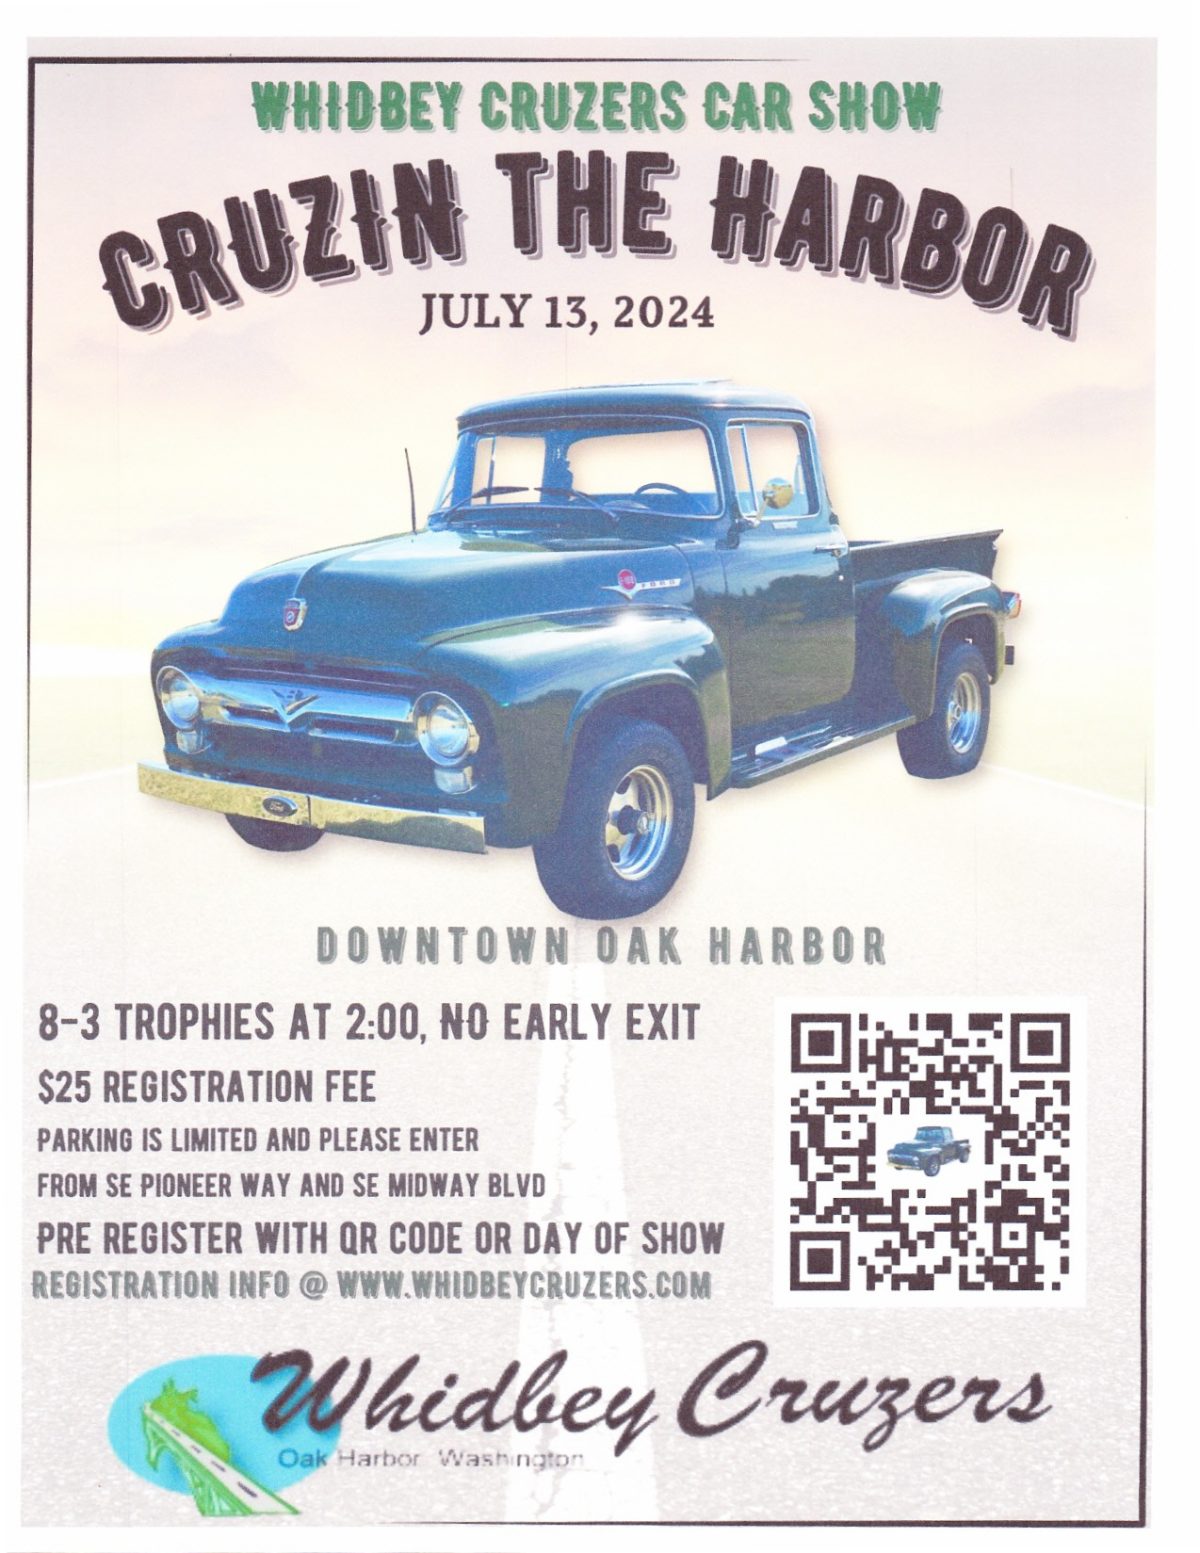 Cruzin’ the Harbor Car Show